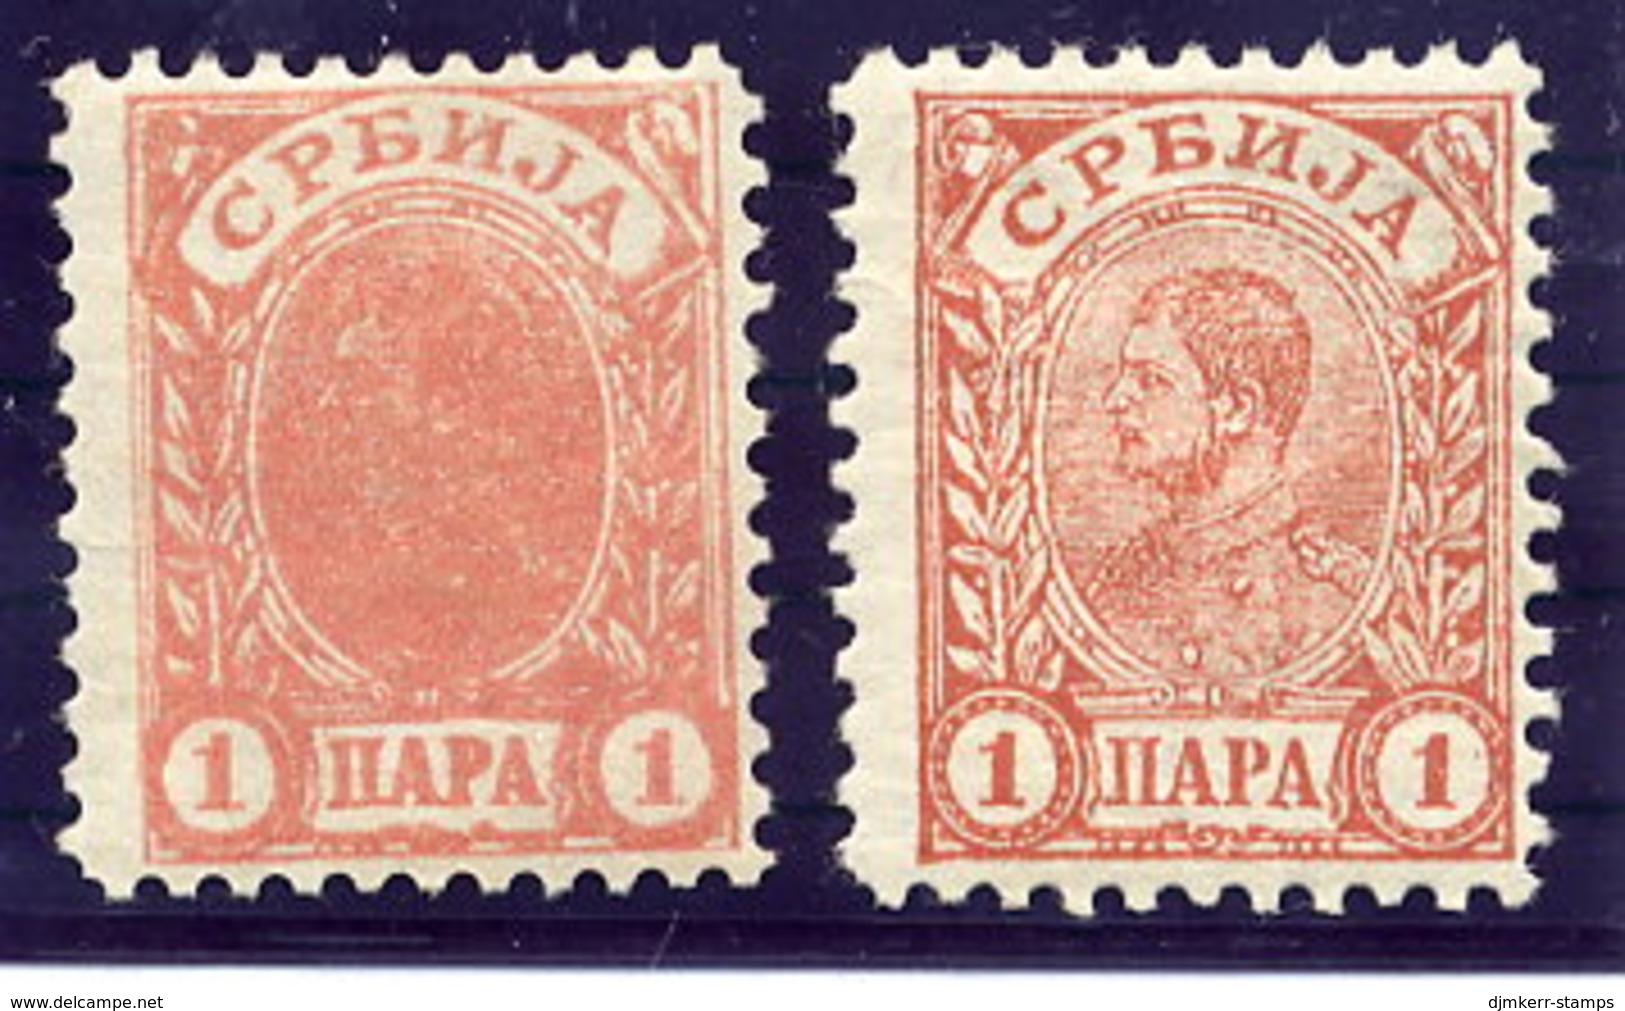 SERBIA 1896 King Alexander I  1 Para Both Colours Perf.11½, LHM / *.  Michel 42A, 43A - Serbie